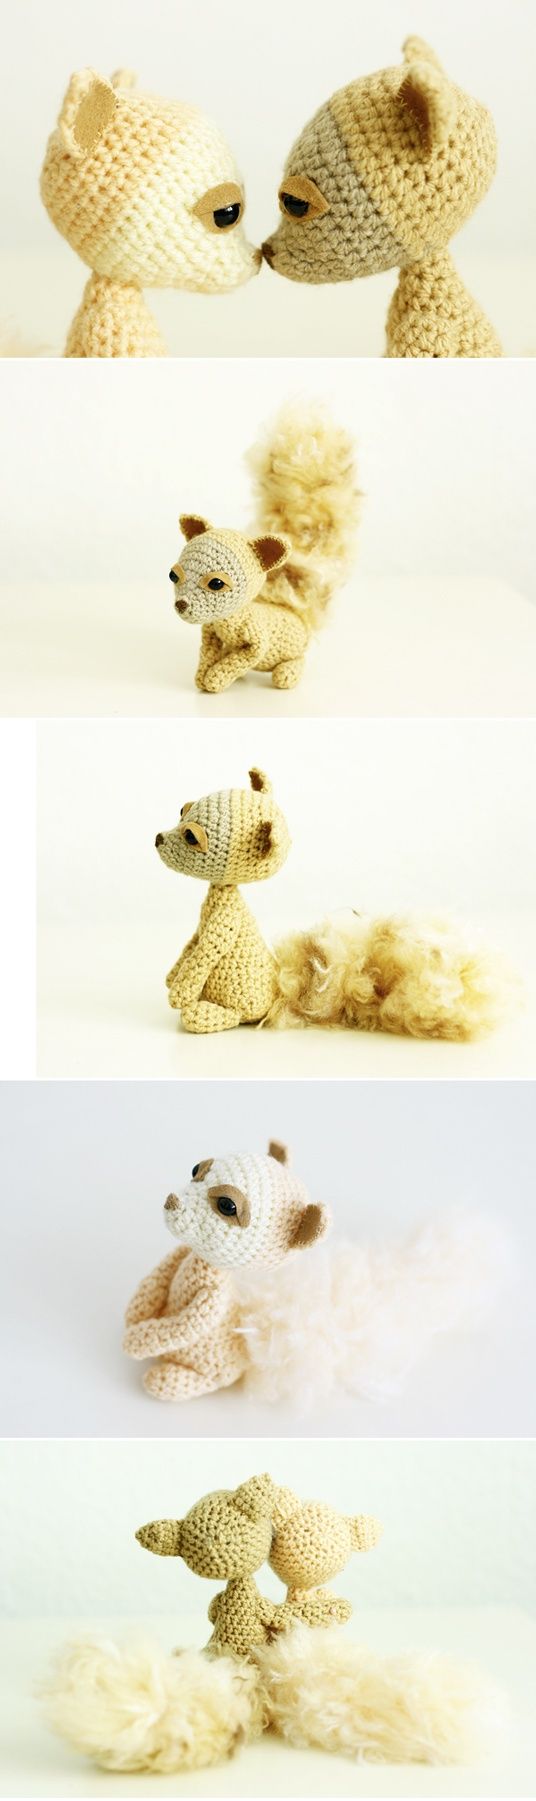 Cute crocheted animals